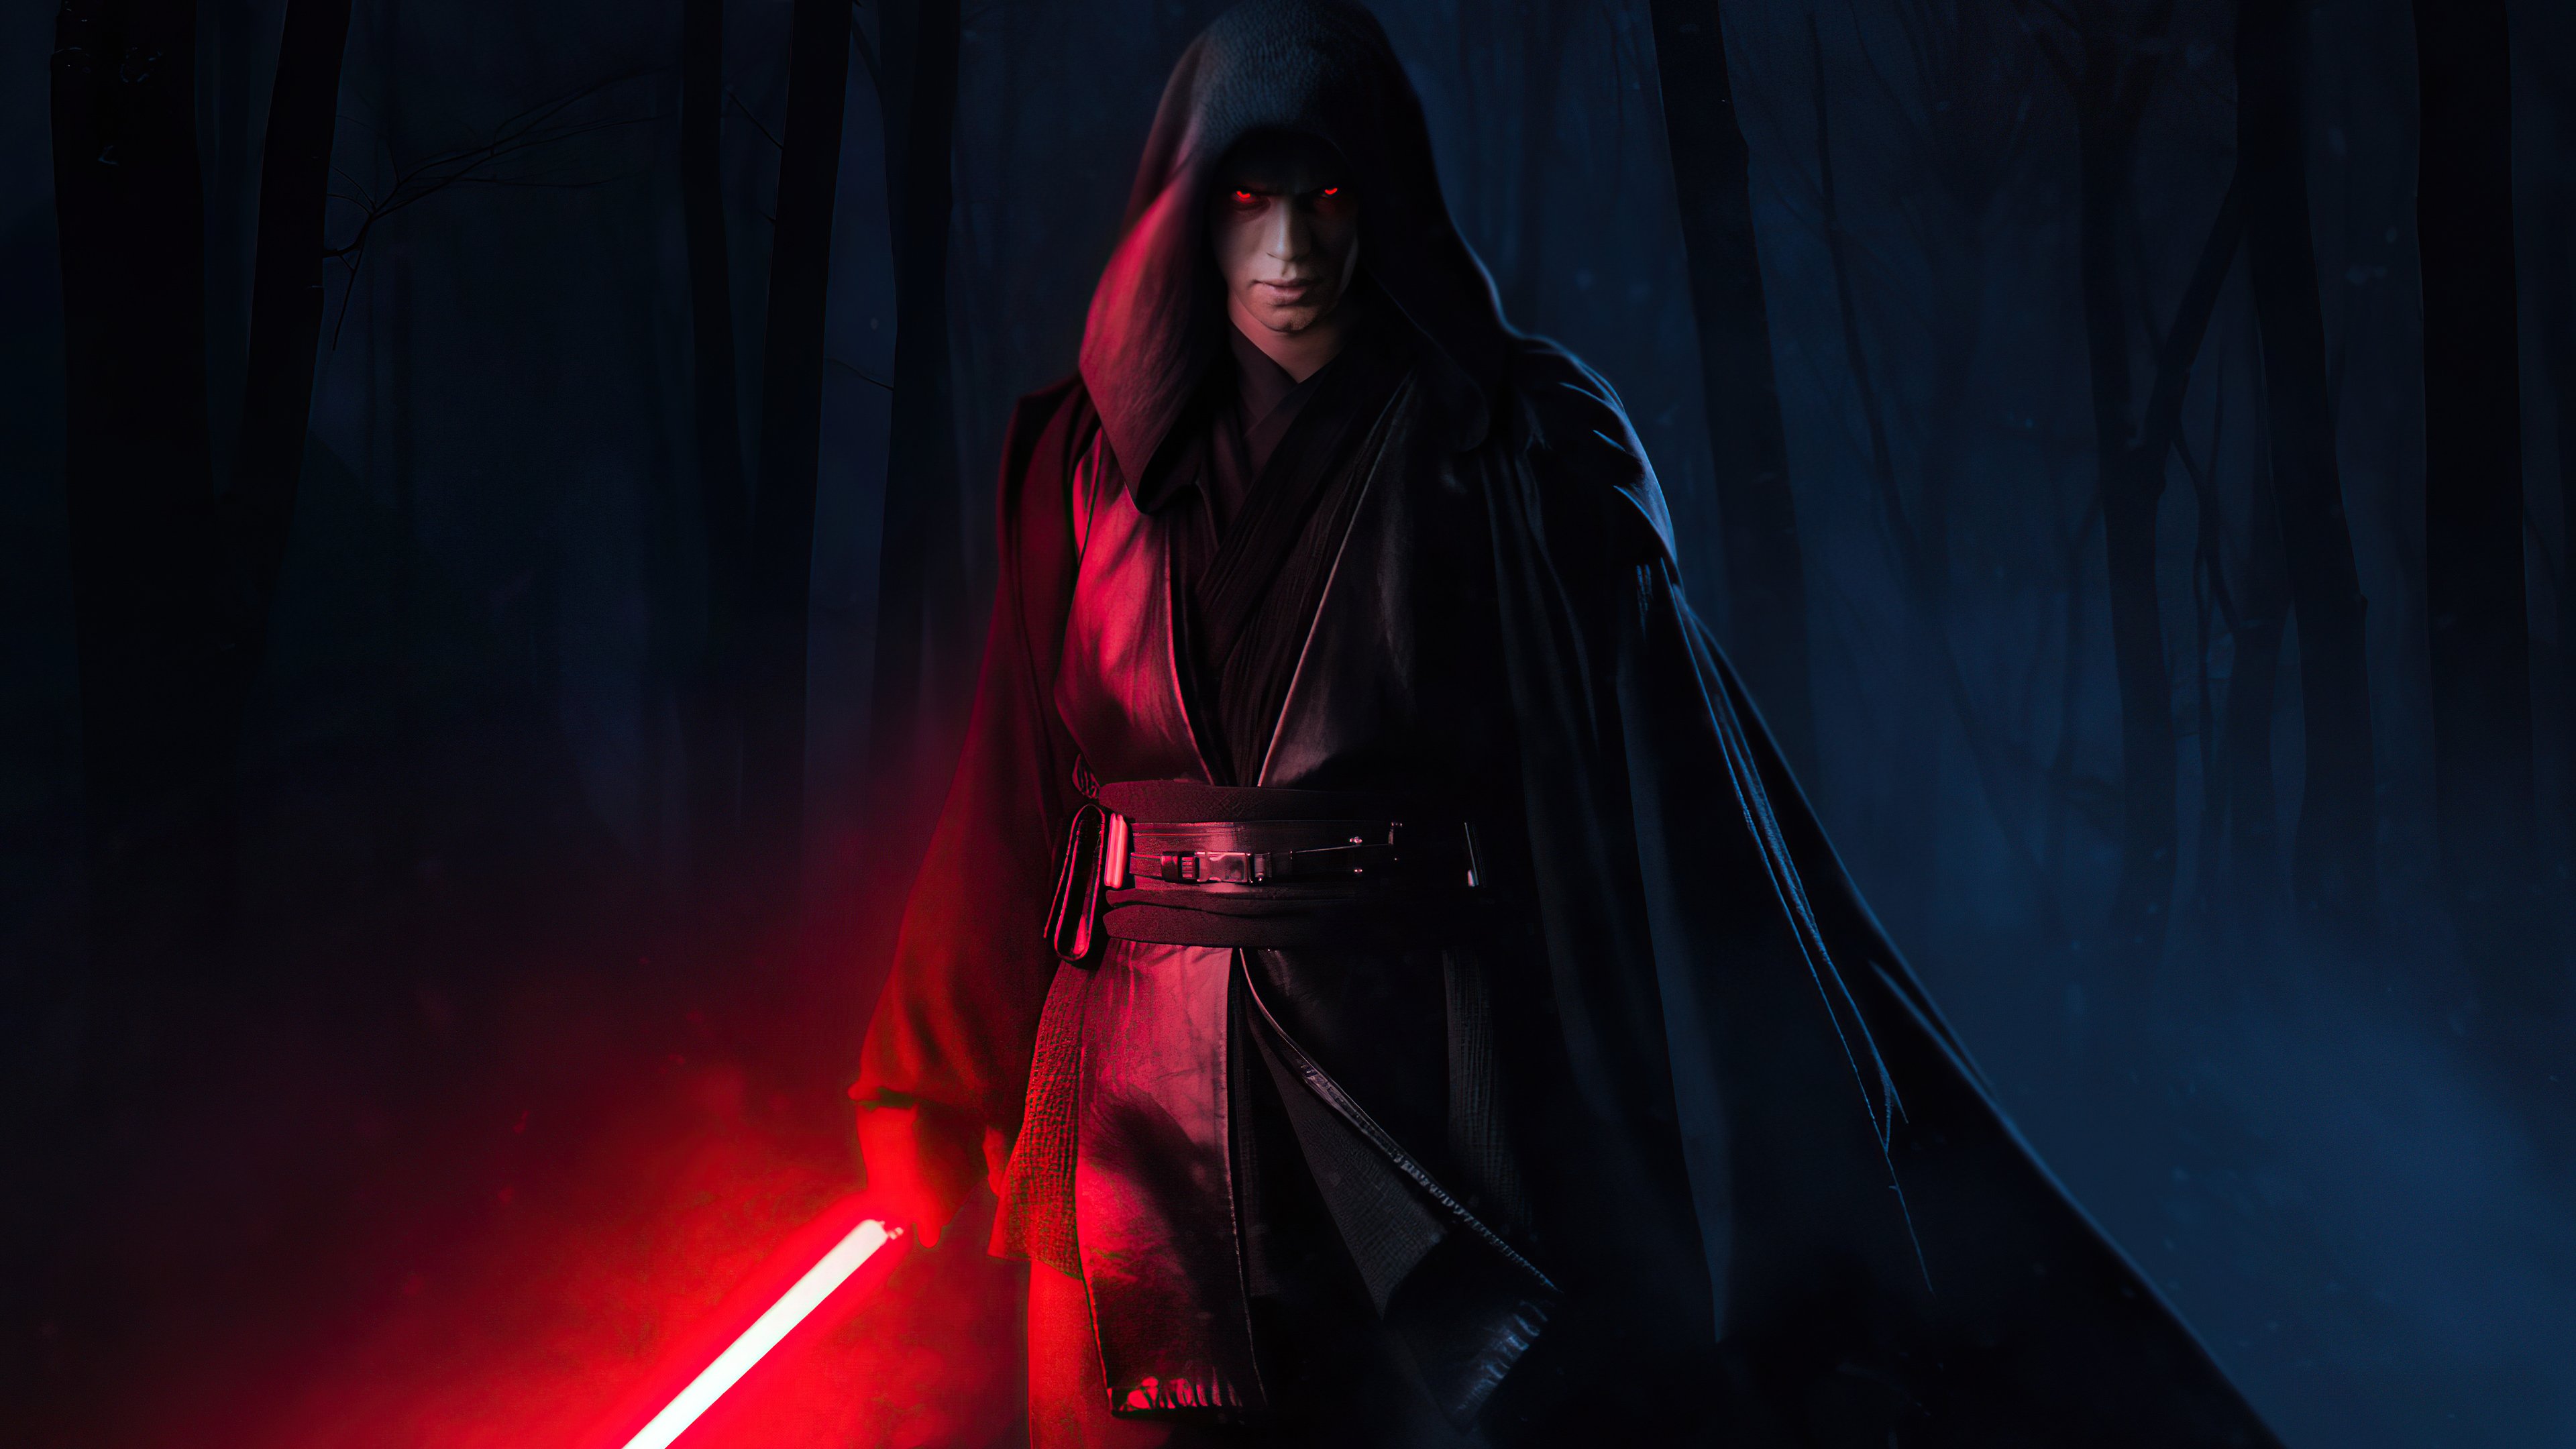 Wallpaper Hayden Christensen as Anakin Skywalker